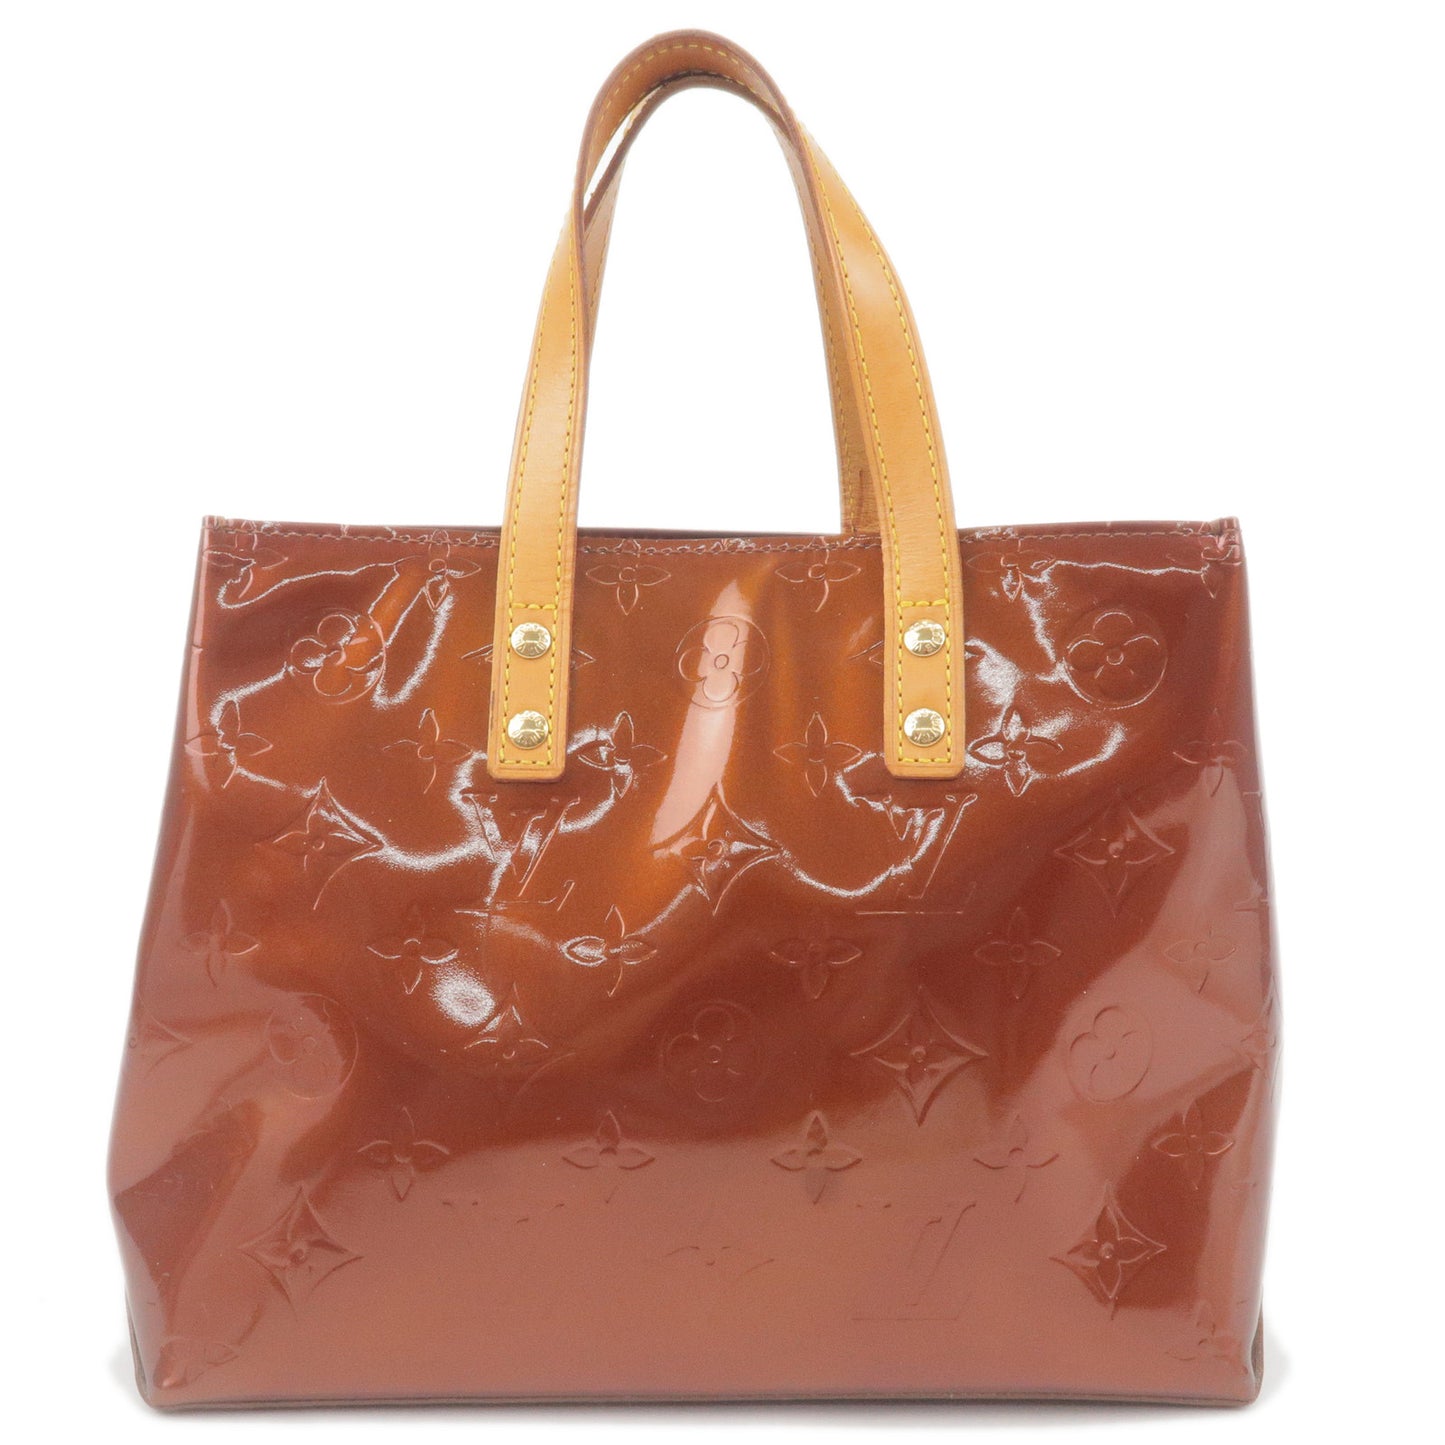 Japan Used Bag] Second Hand Louis Vuitton Lead Pm Handbag